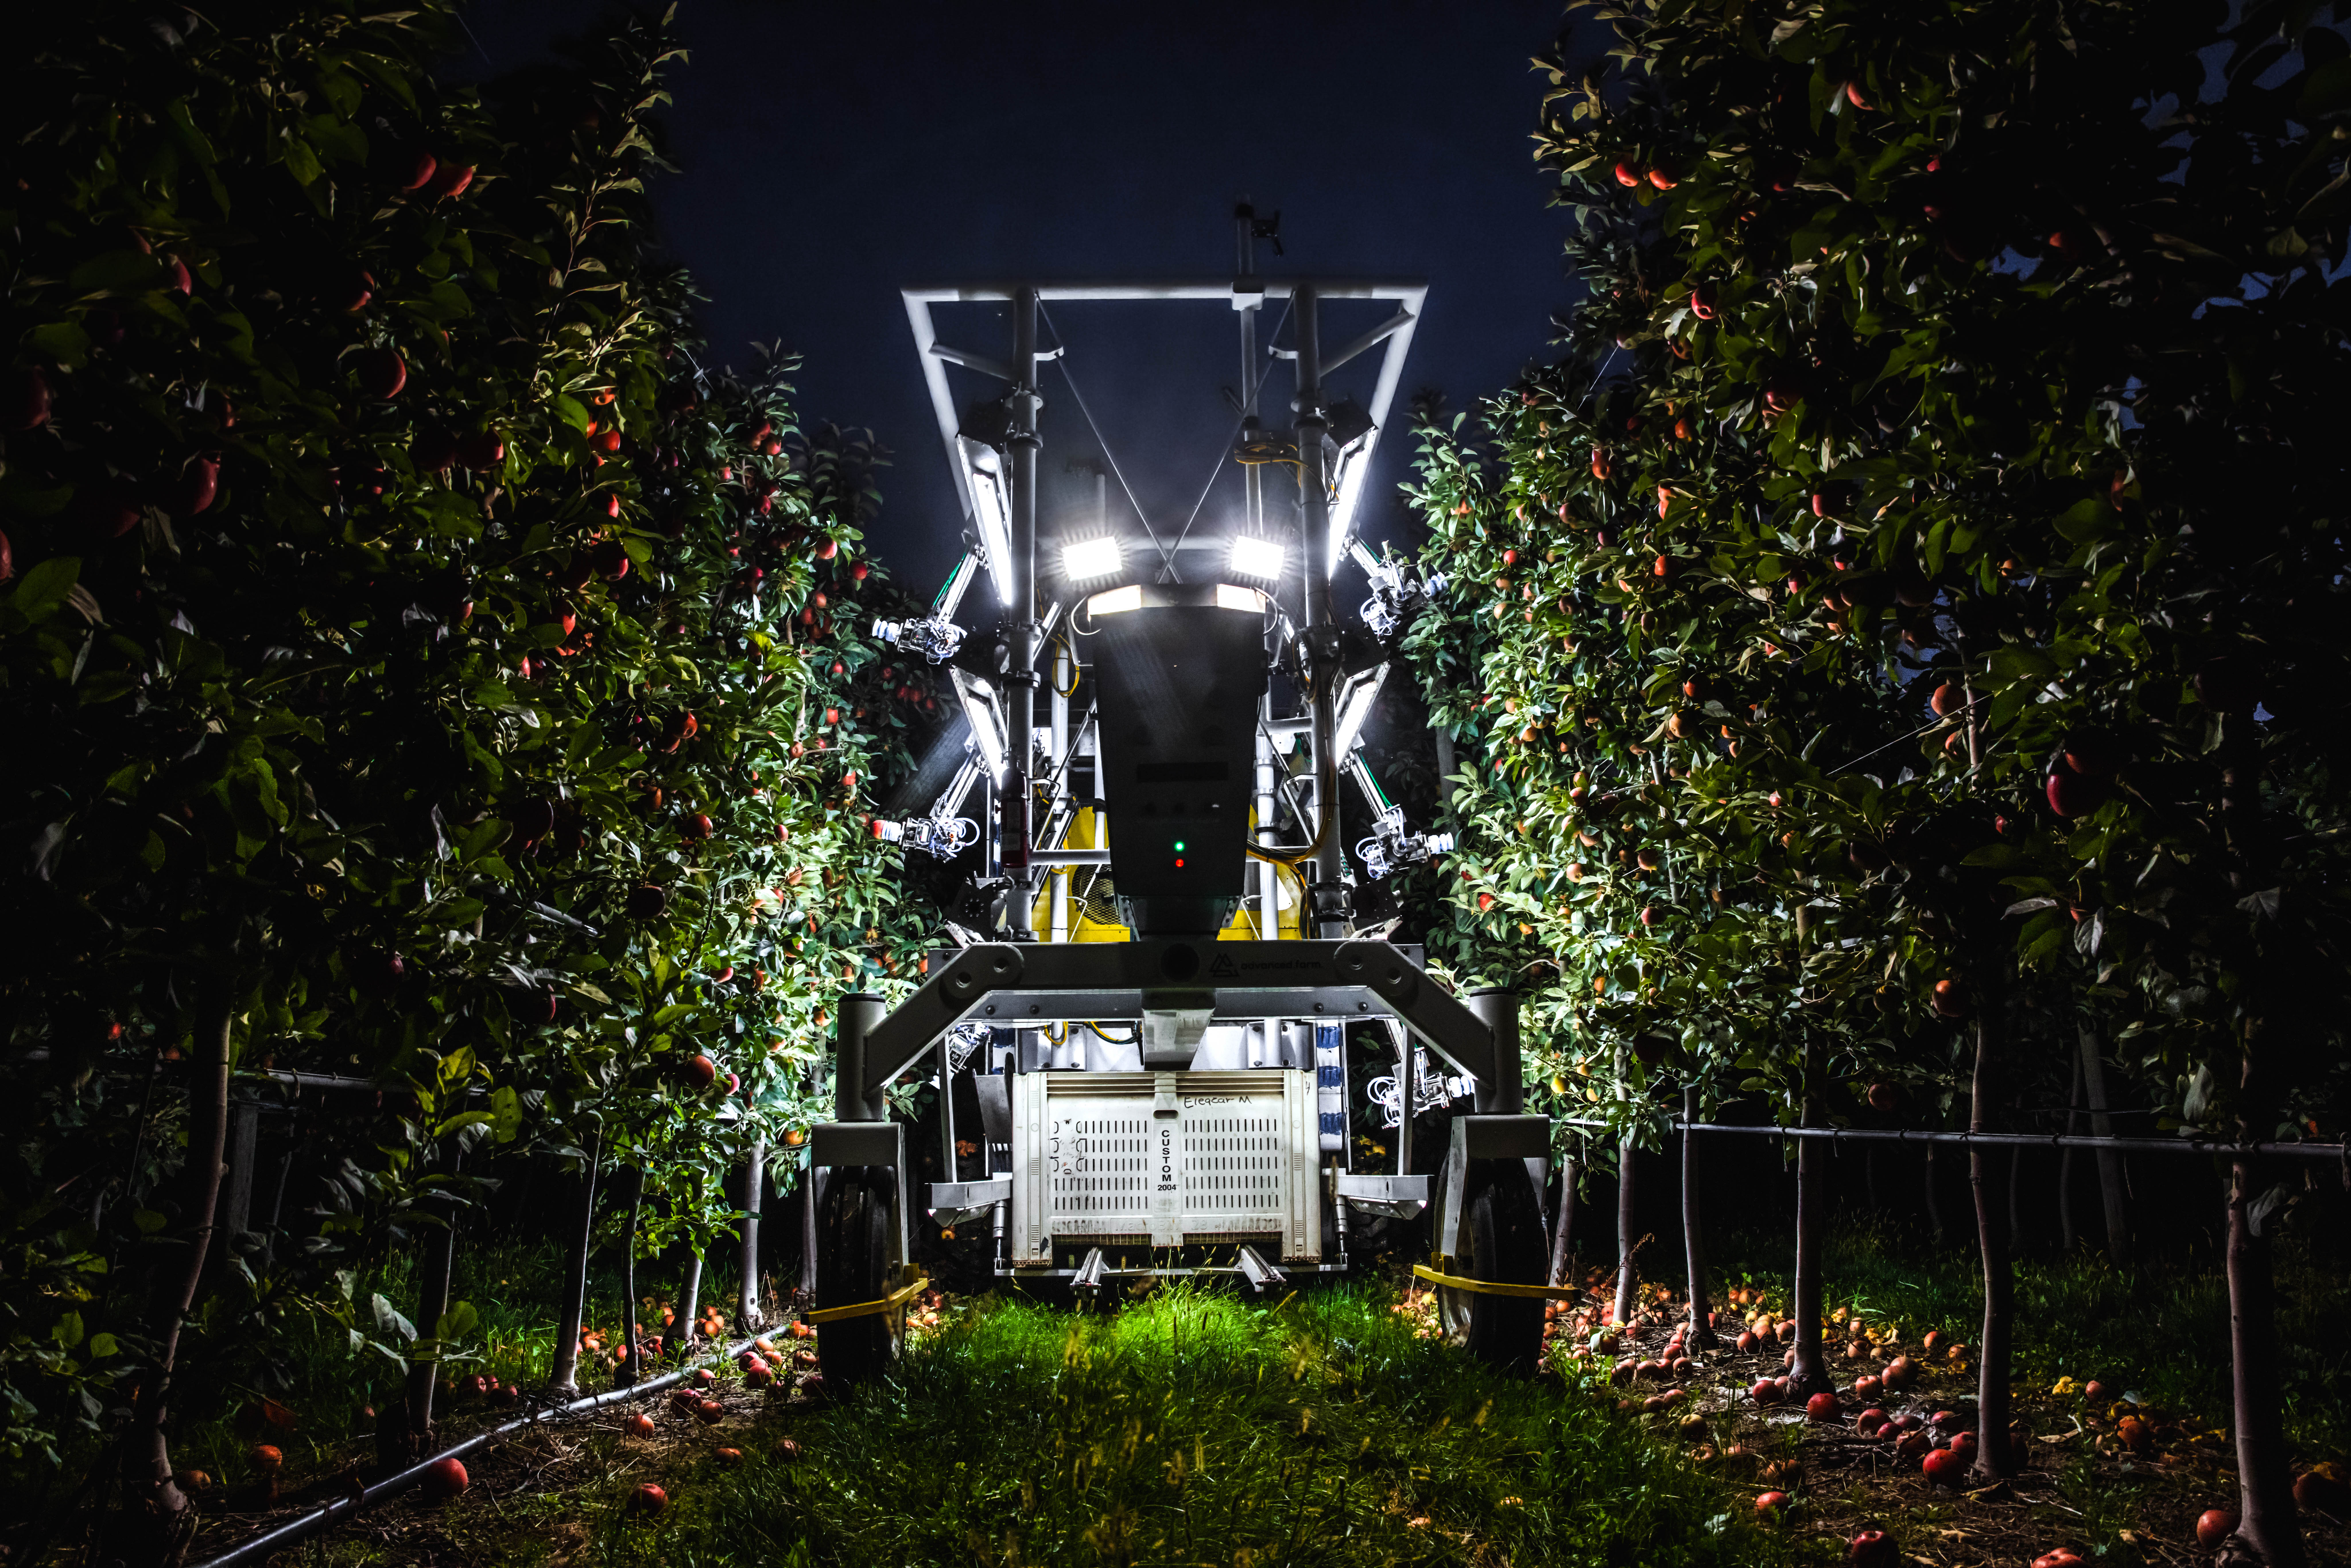 1_The advanced.farm BetterPick robotic apple harvester picks fruit at night, demonstrating one of the many benefits of autonomy